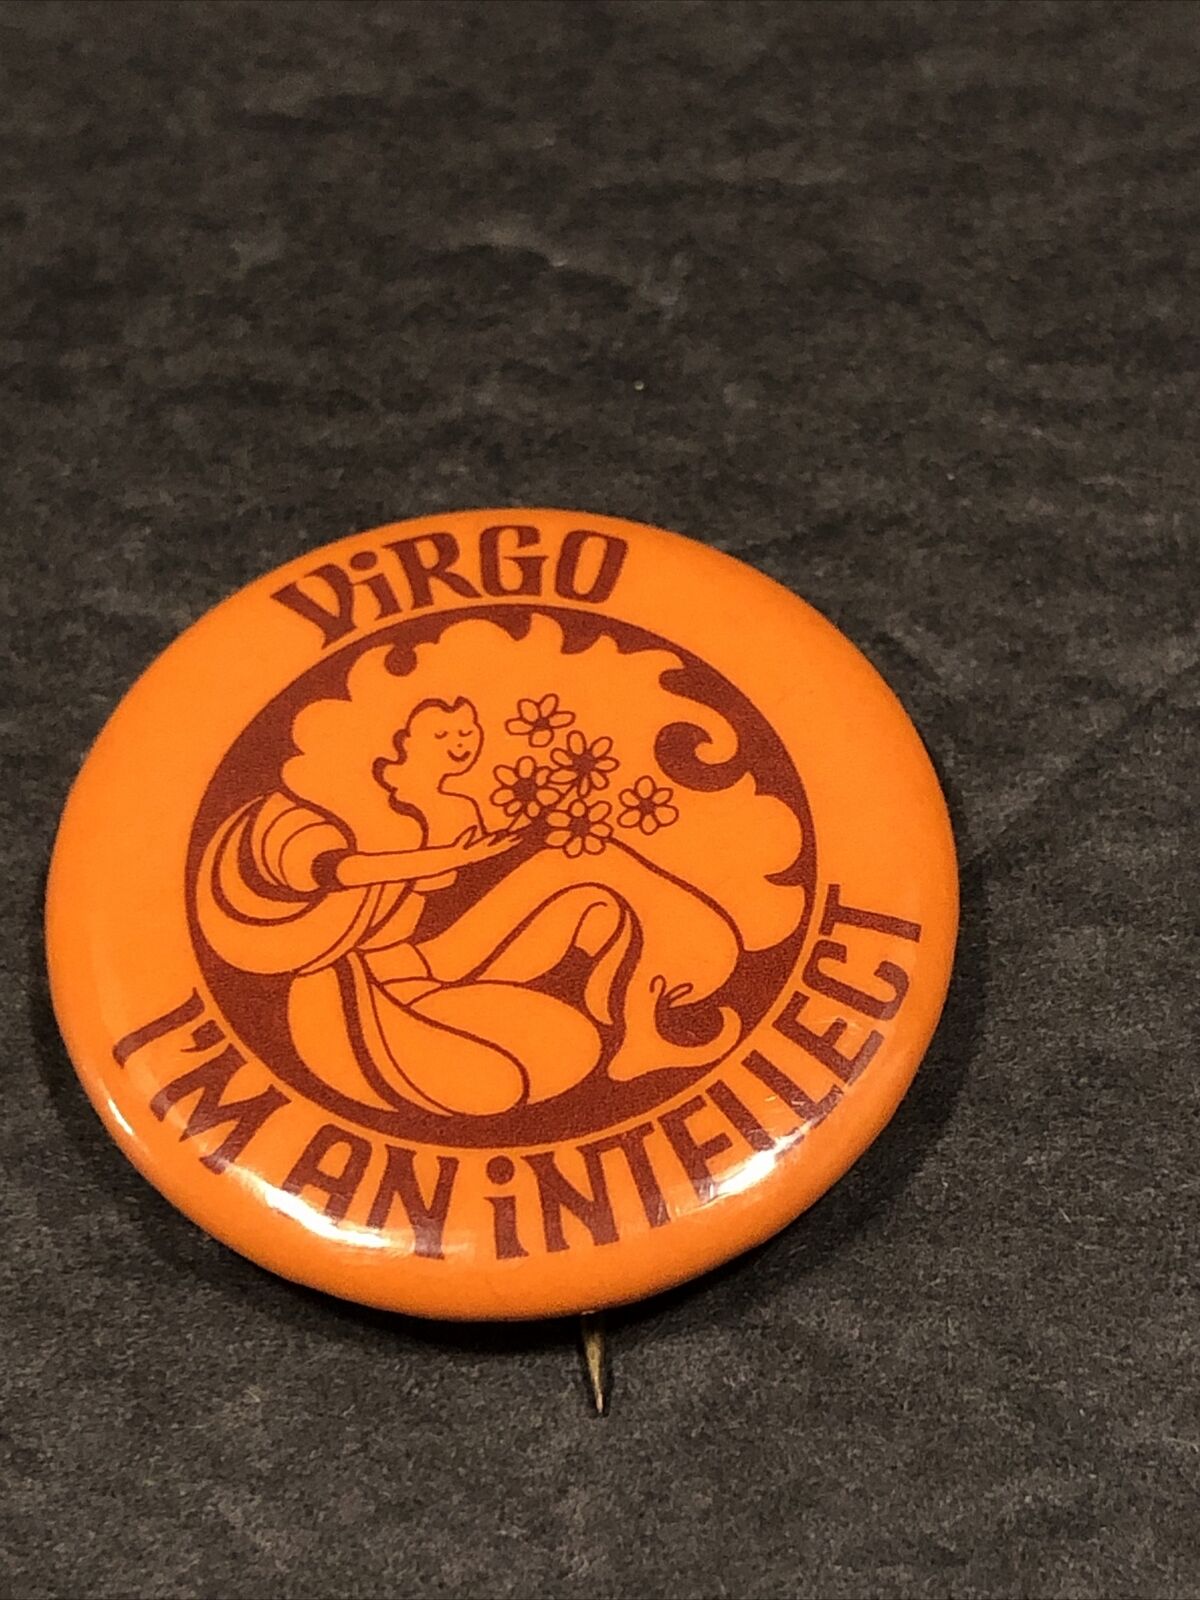 Zodiac Vintage Button Pin Badge - Virgo I'm an Intellect - 1970s 1 1/4 inch